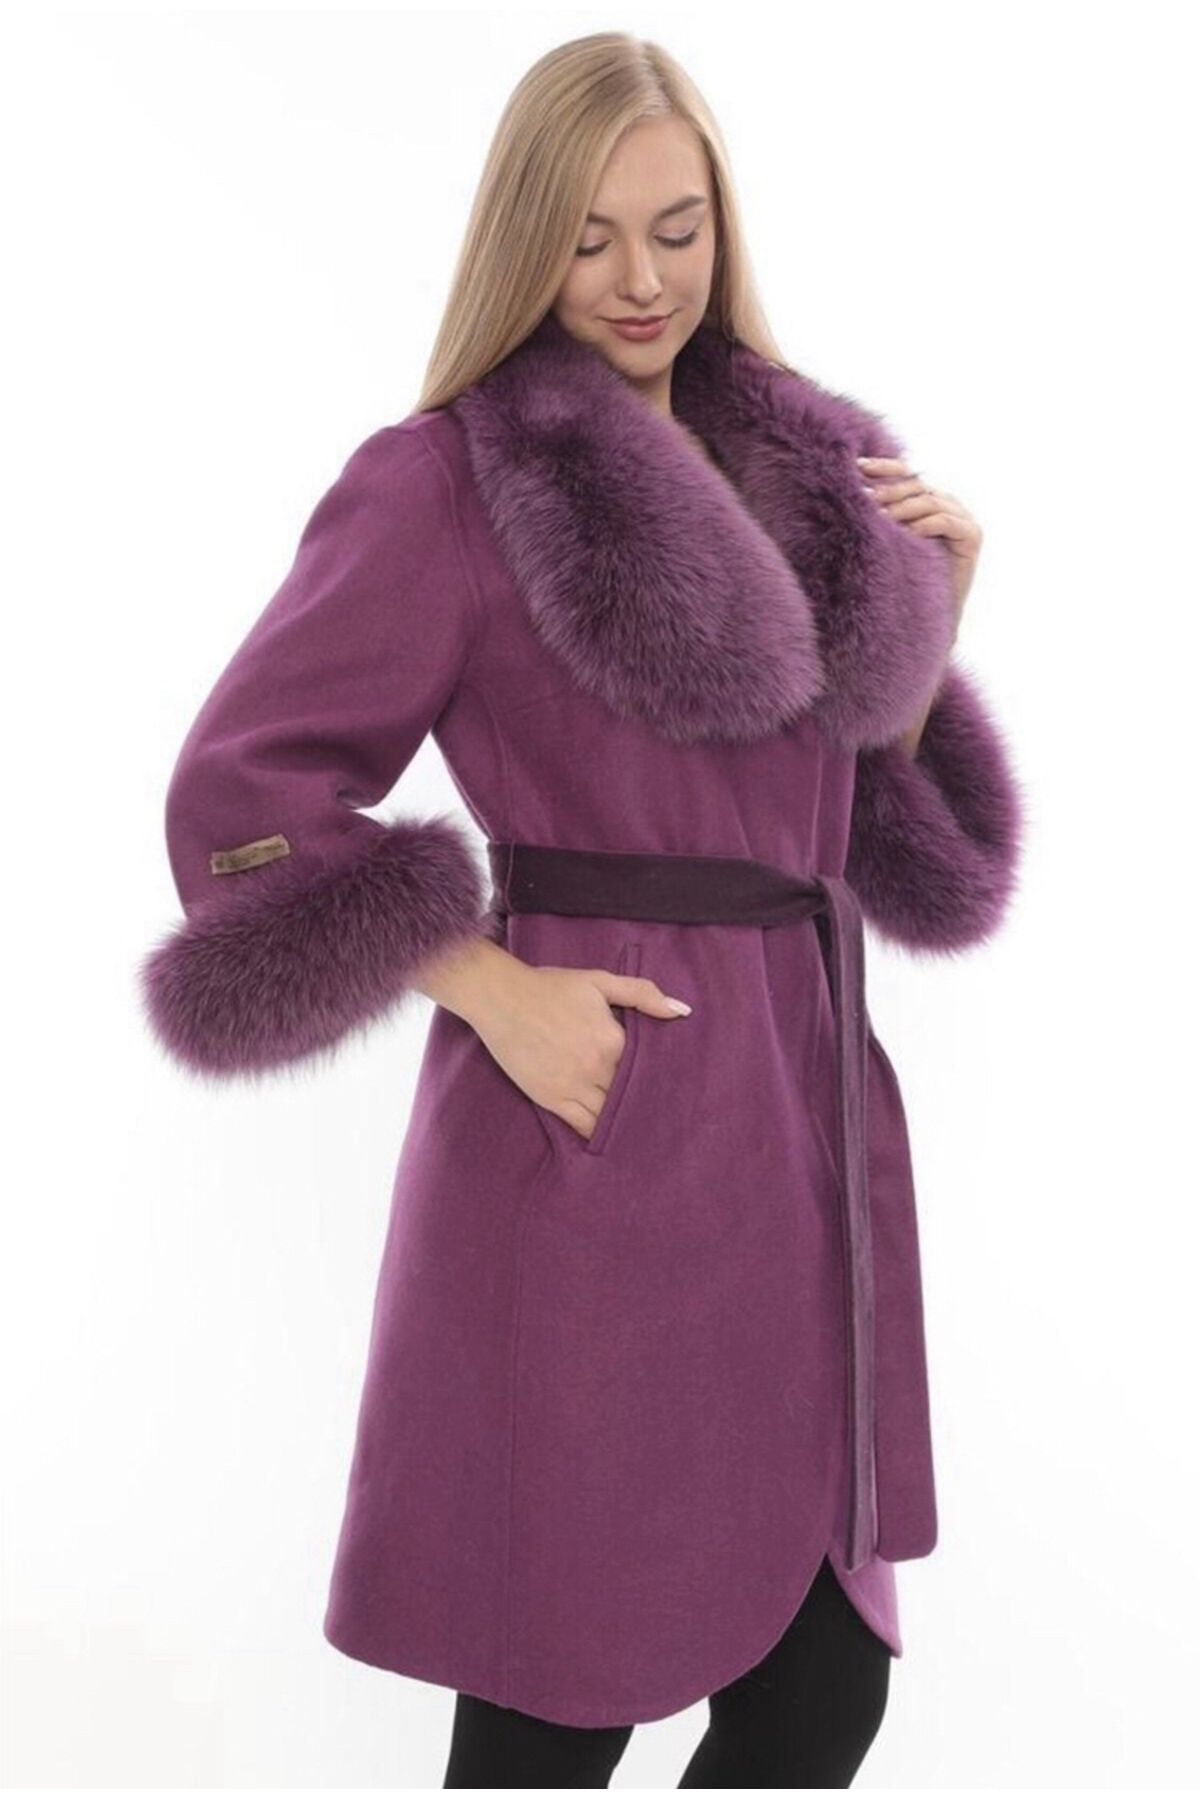 American Tise Light Coat with Fur on Sleeves and Collar Kol ve Yaka Kürklü Hafif Kaban Palto